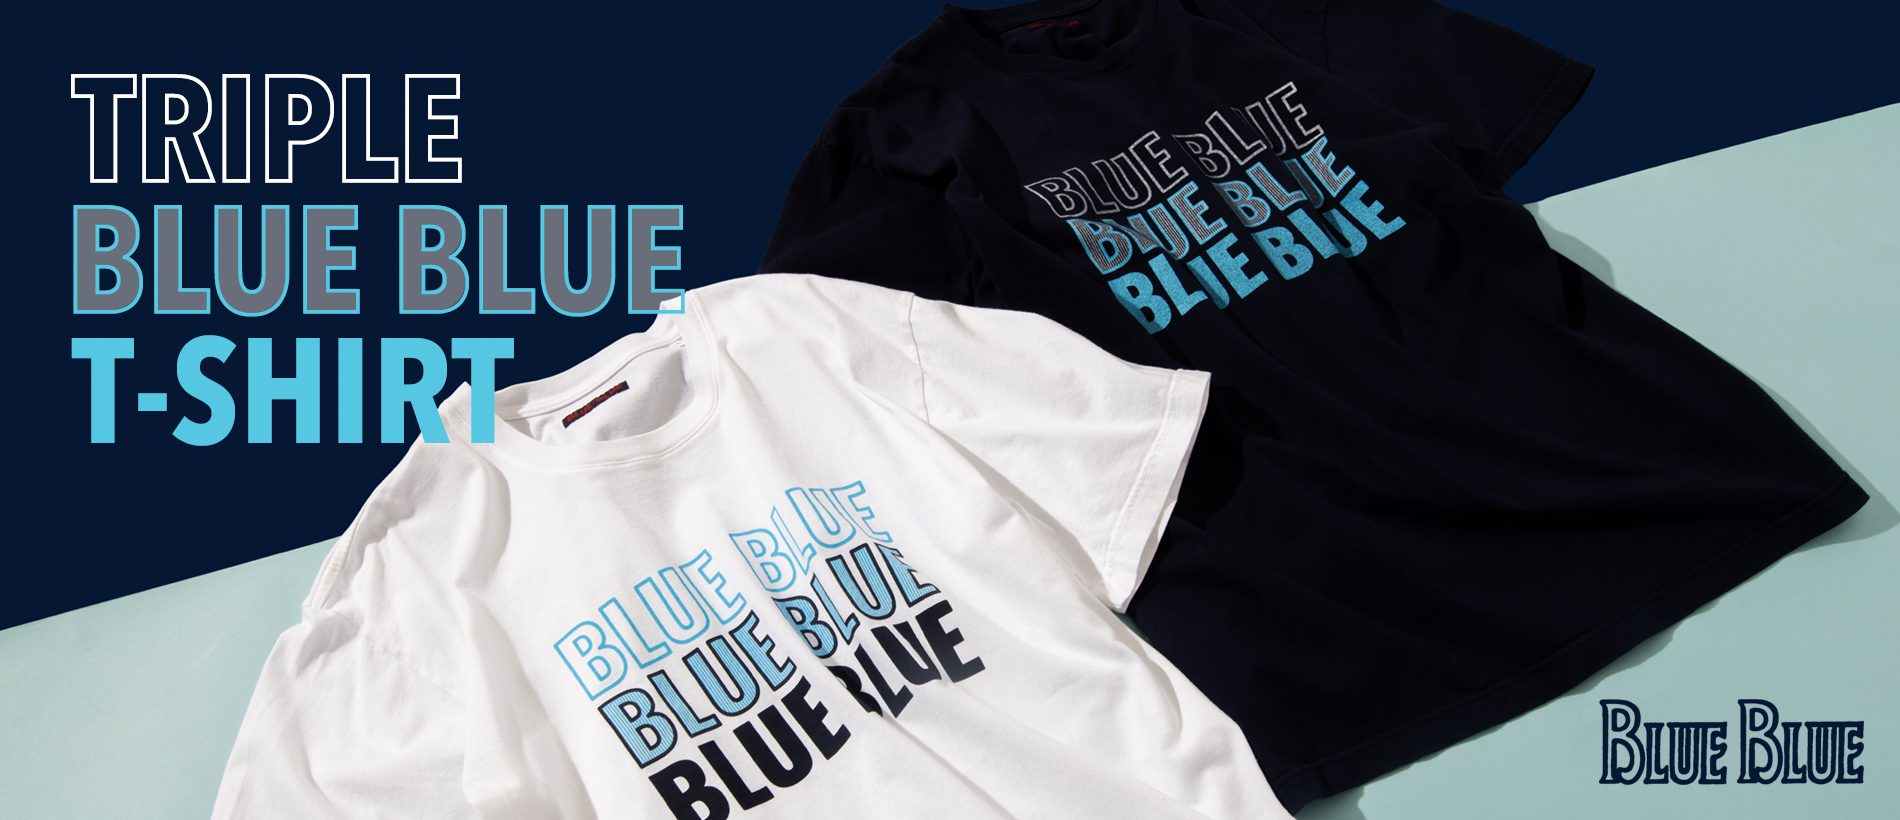 BLUE BLUE TRIPLE BLUE BLUE T-SHIRT| HOLLYWOOD RANCH MARKET 